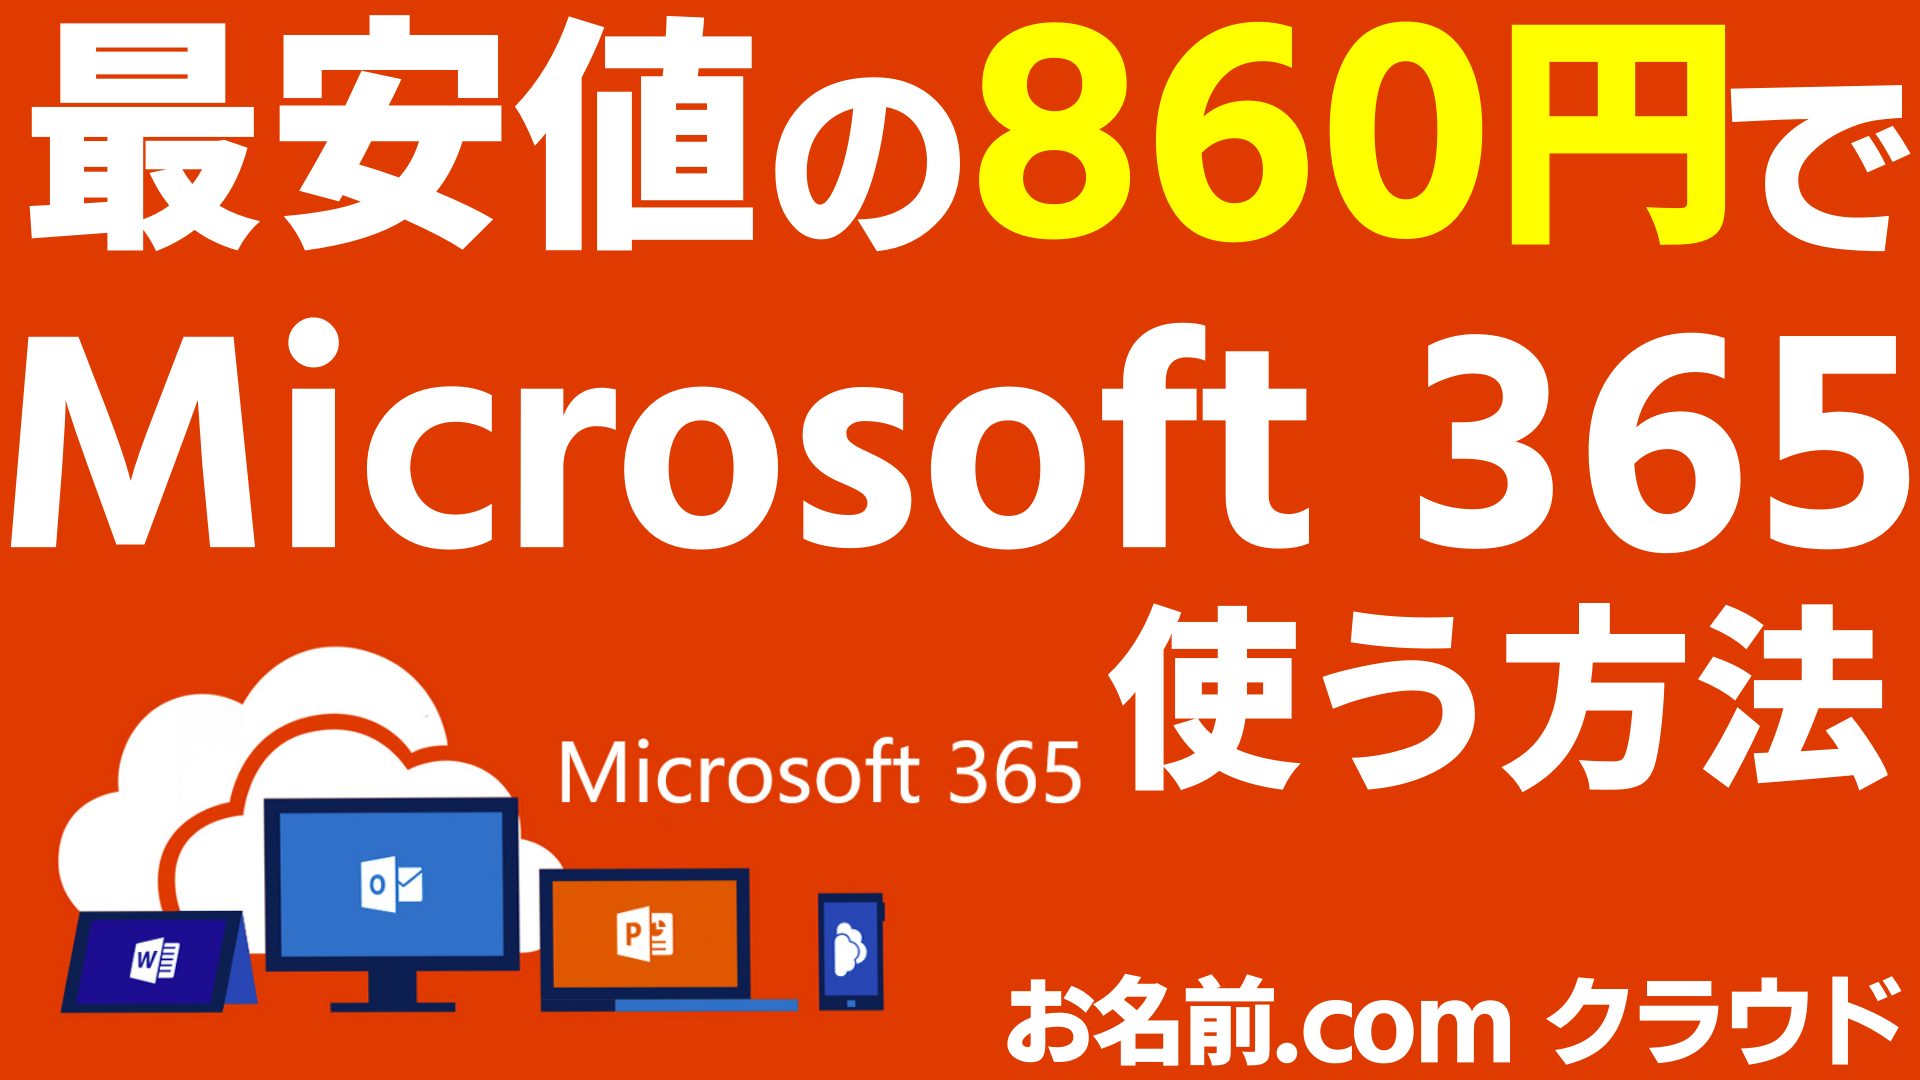 Office365 Business お名前com